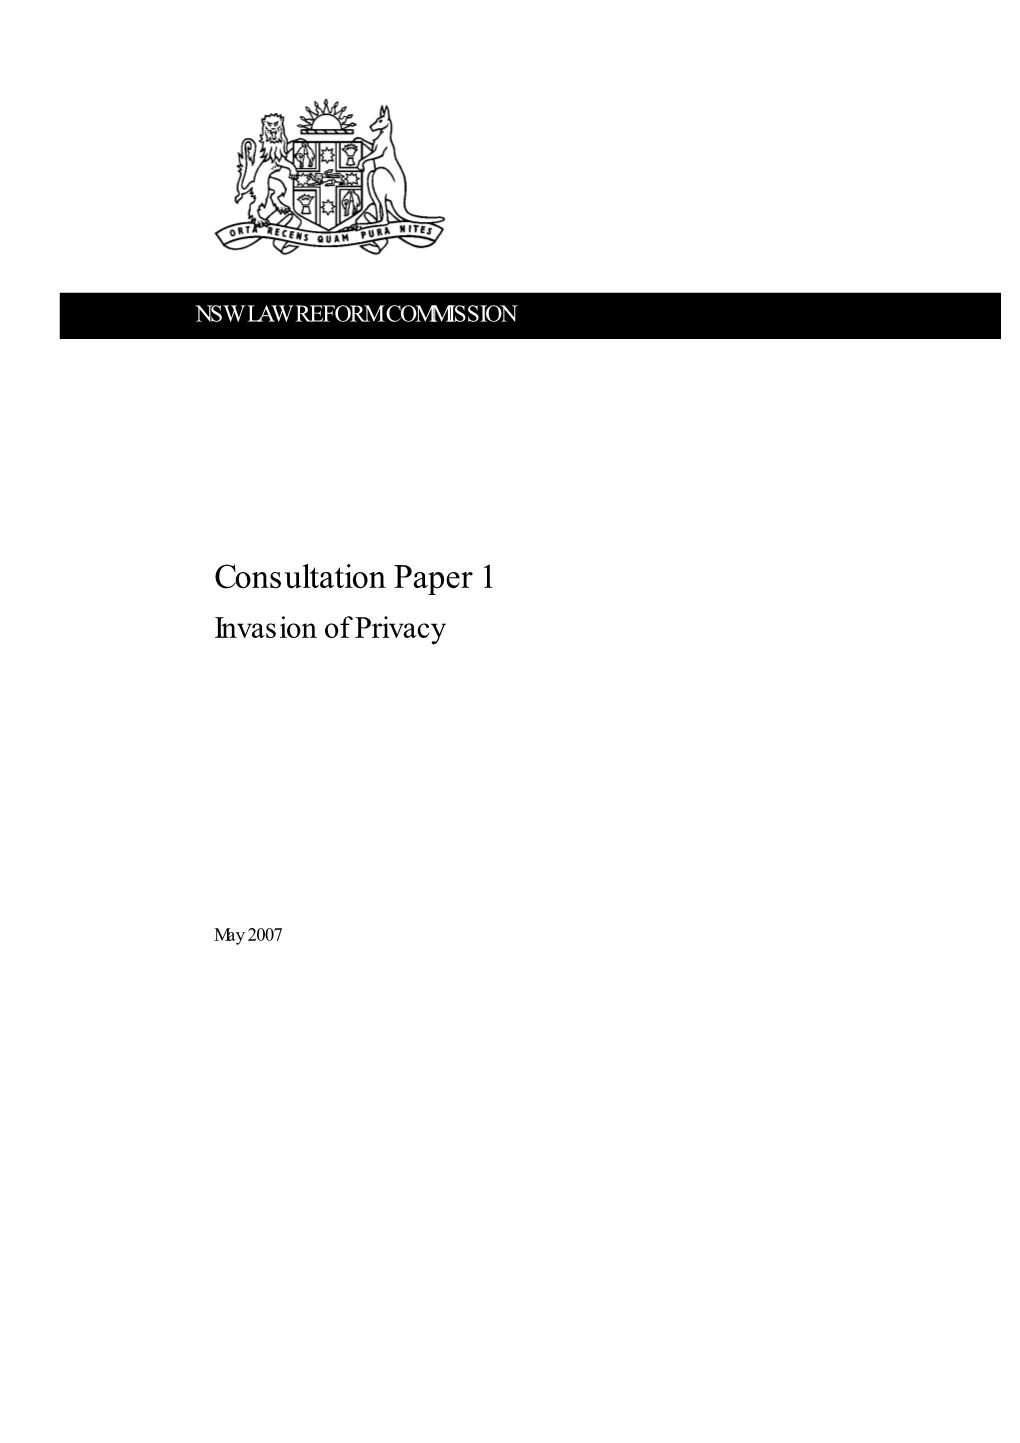 Consultation Paper 1: Invasion of Privacy